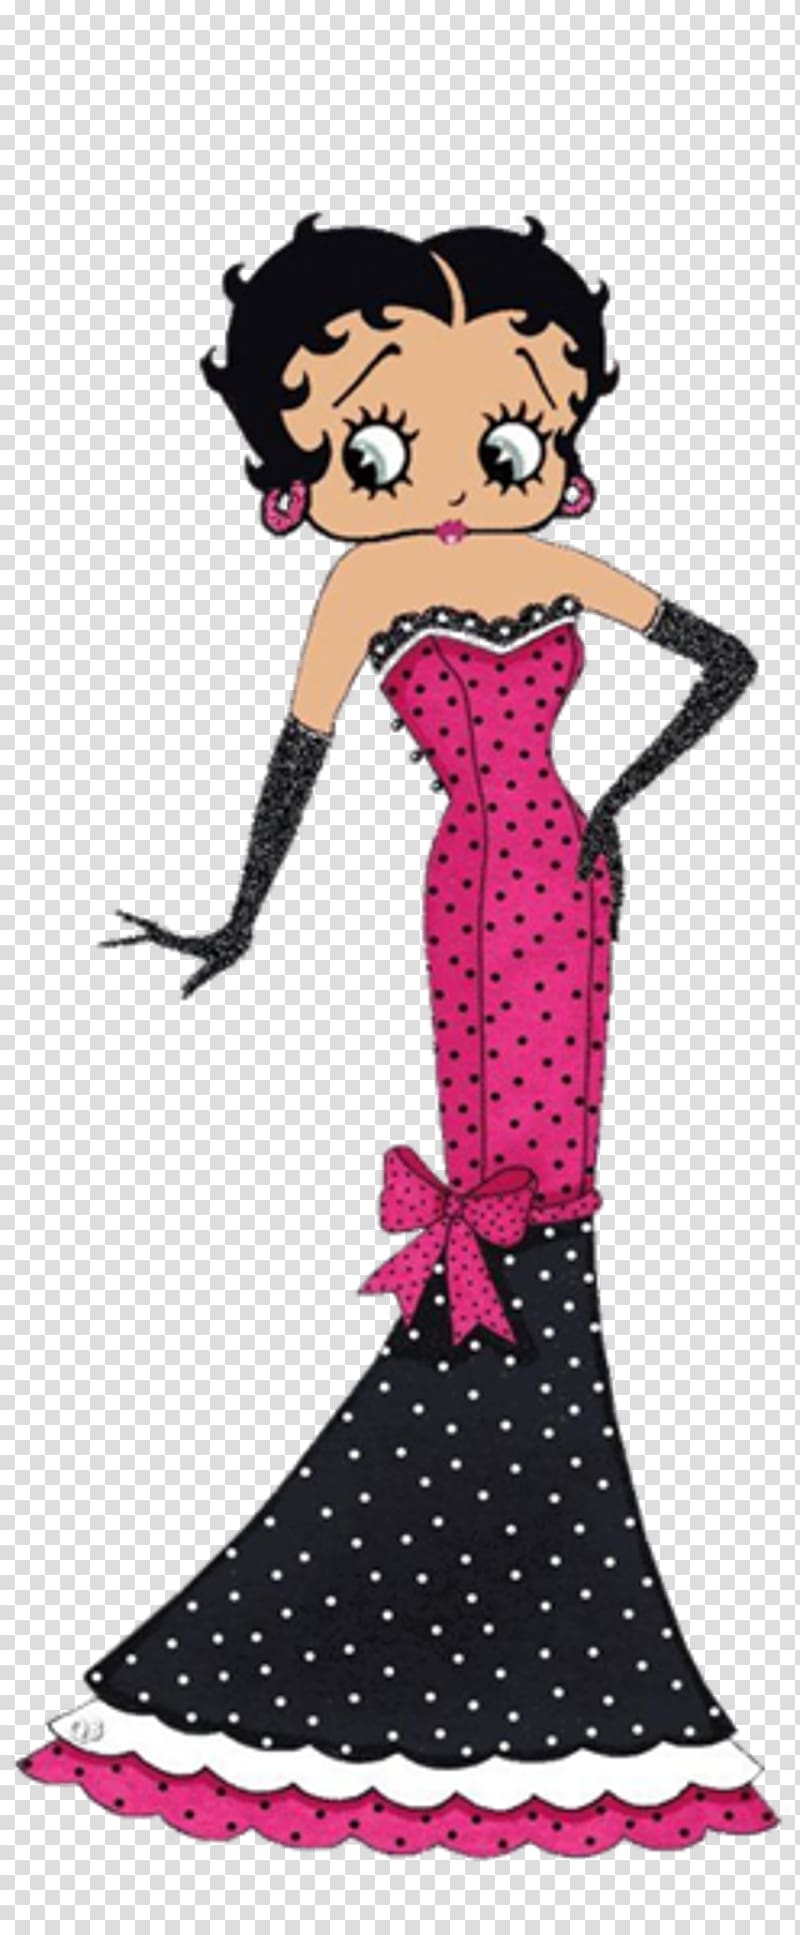 Betty Boop Animated cartoon Jazz Age Animation, Animation.